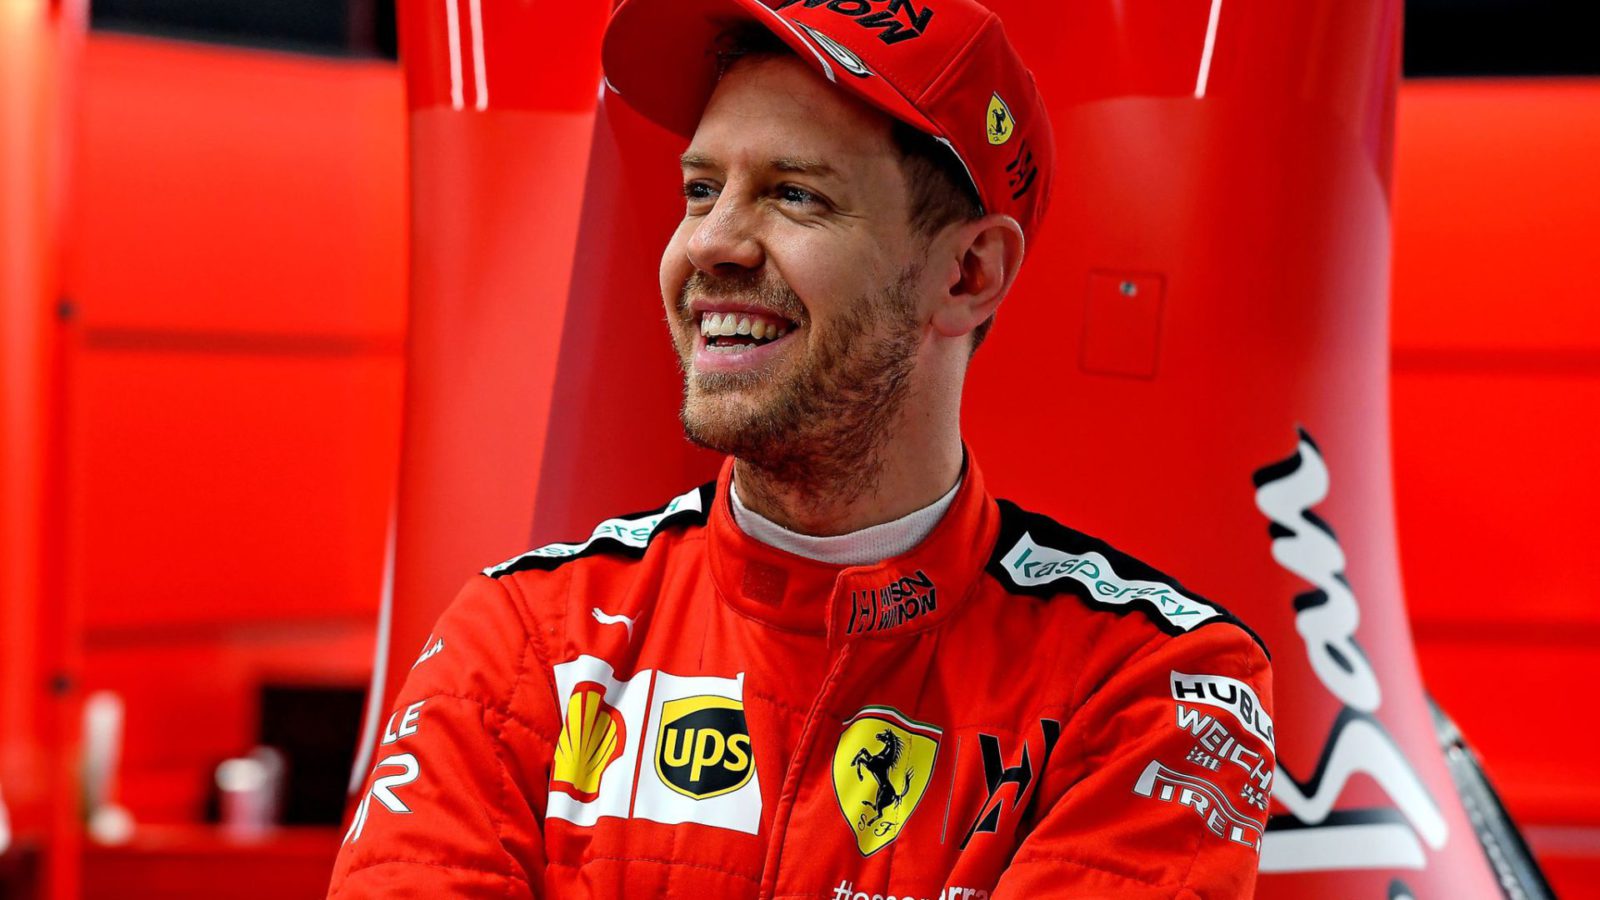  Sebastian Vettel Joins Aston Martin Racing Starting with 2021 Season - Newslibre